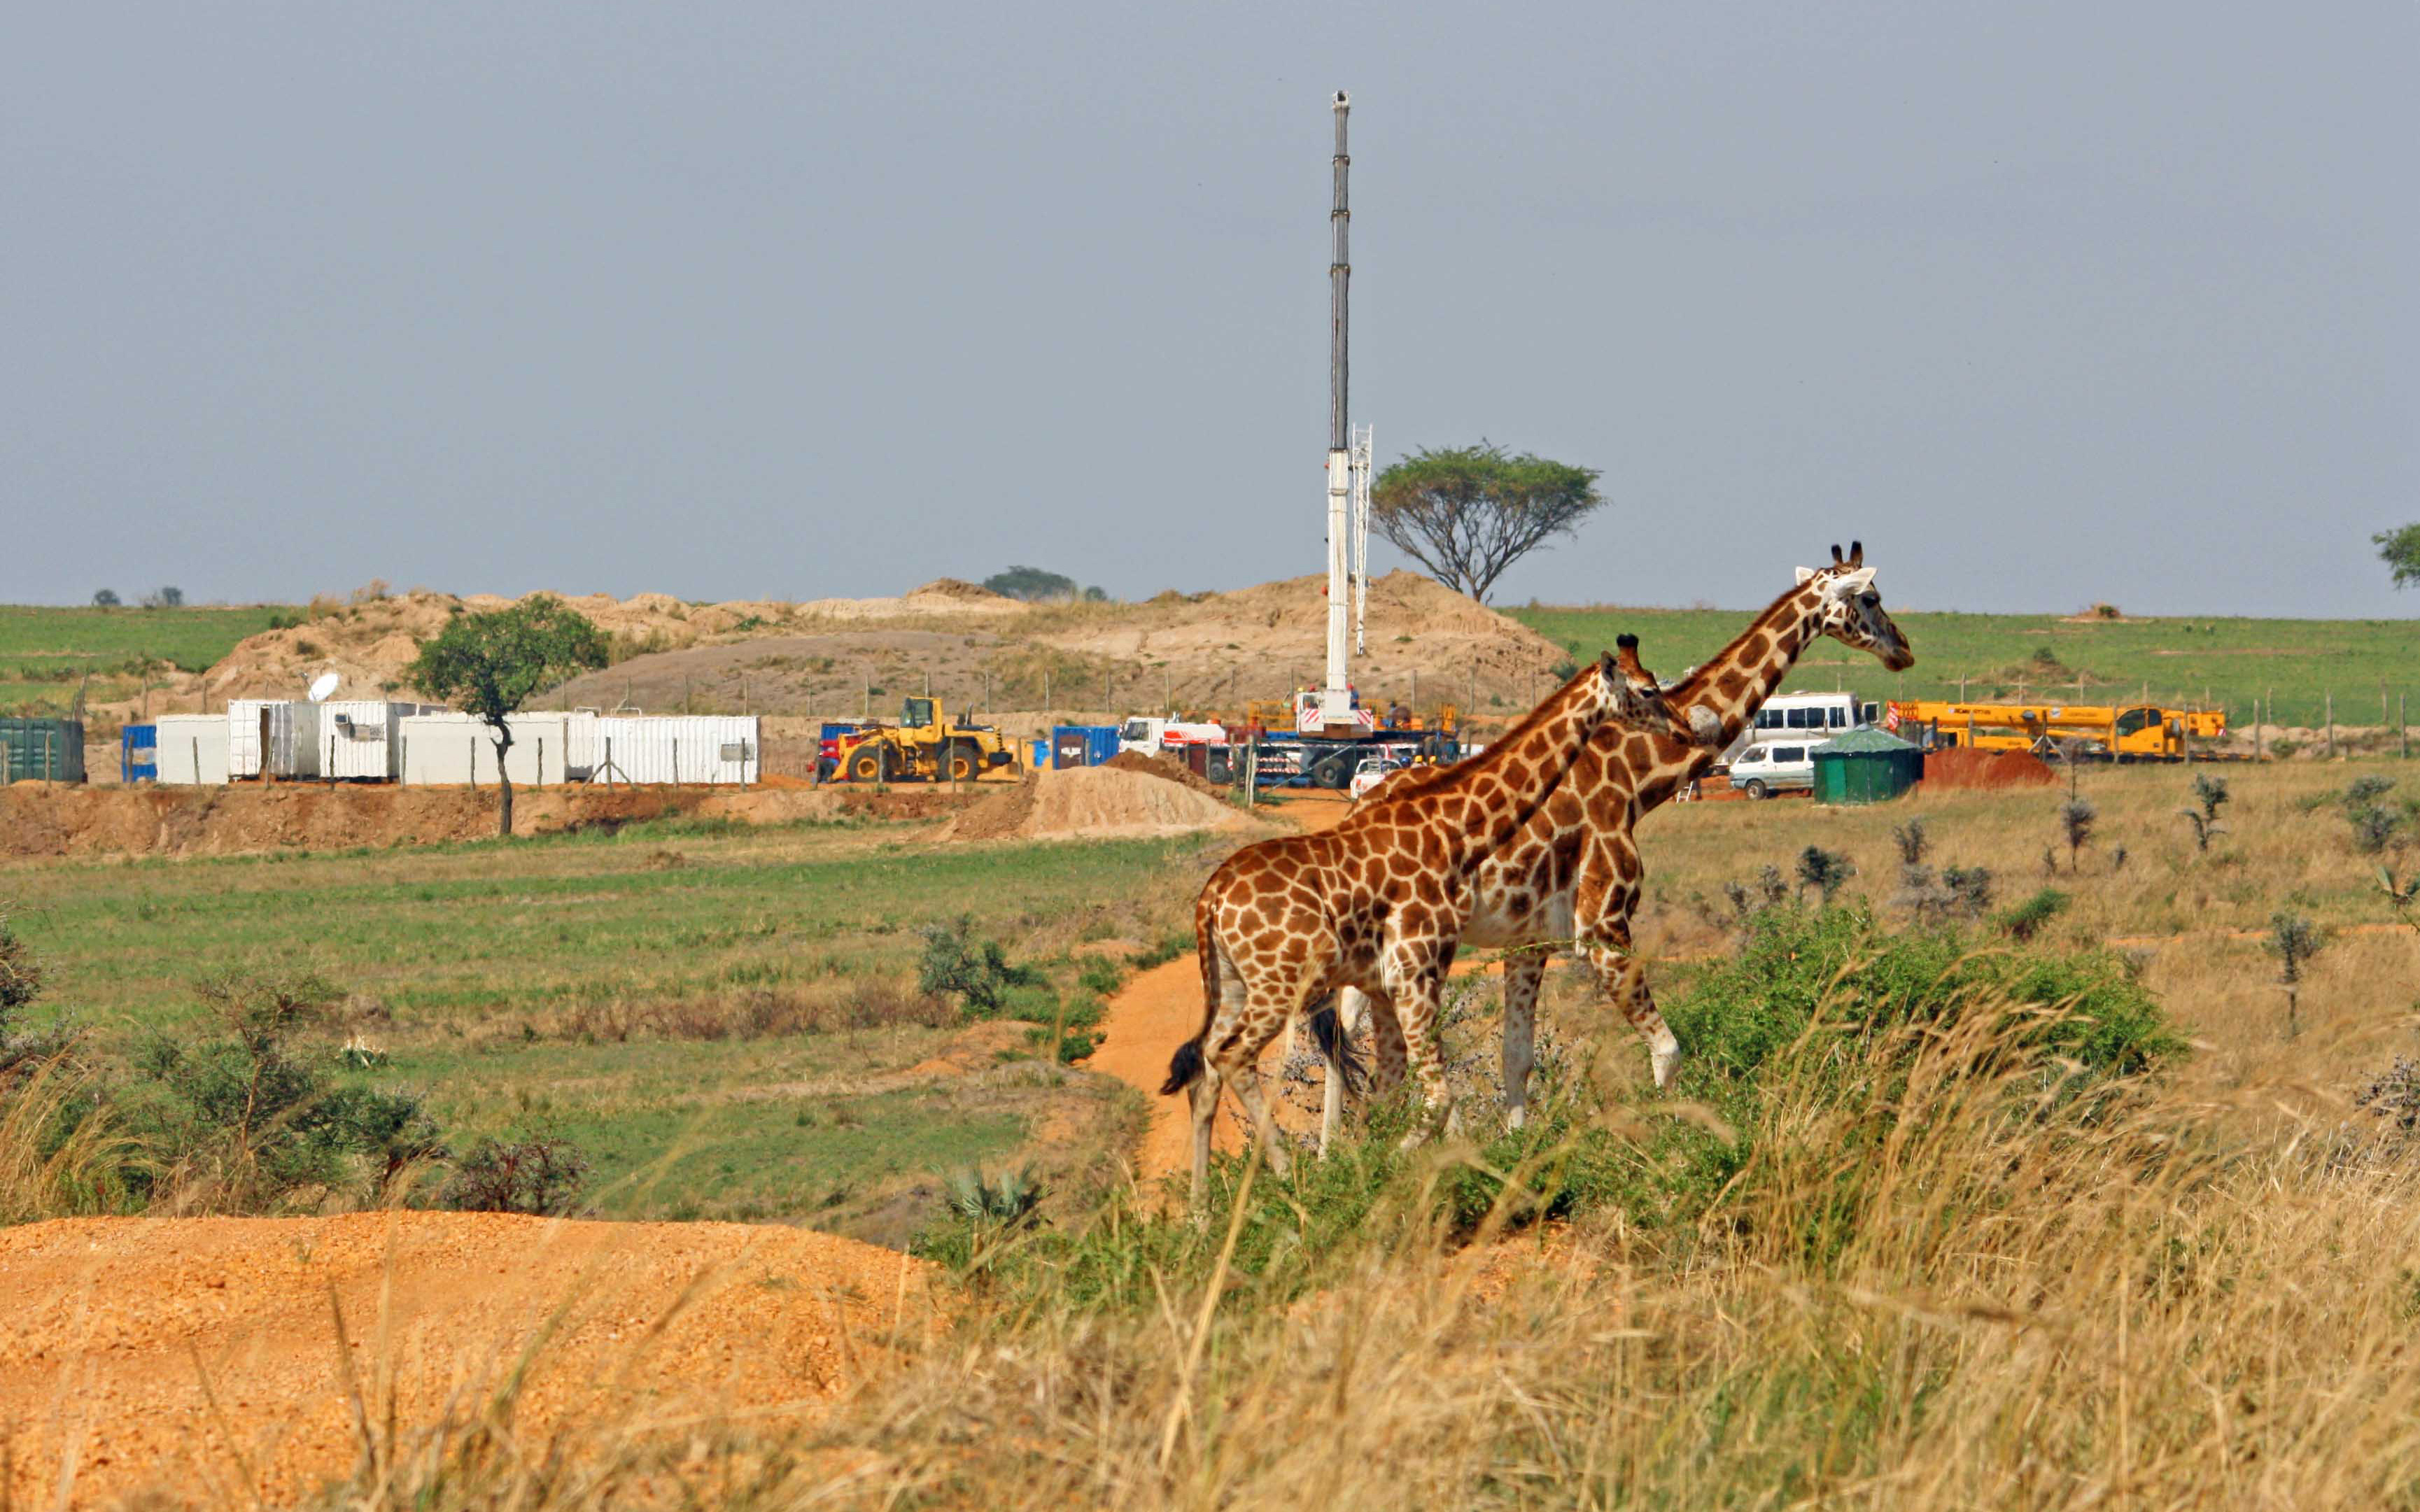 Industrial activity is increasingly impacting wildlife habitat in the African savannah.